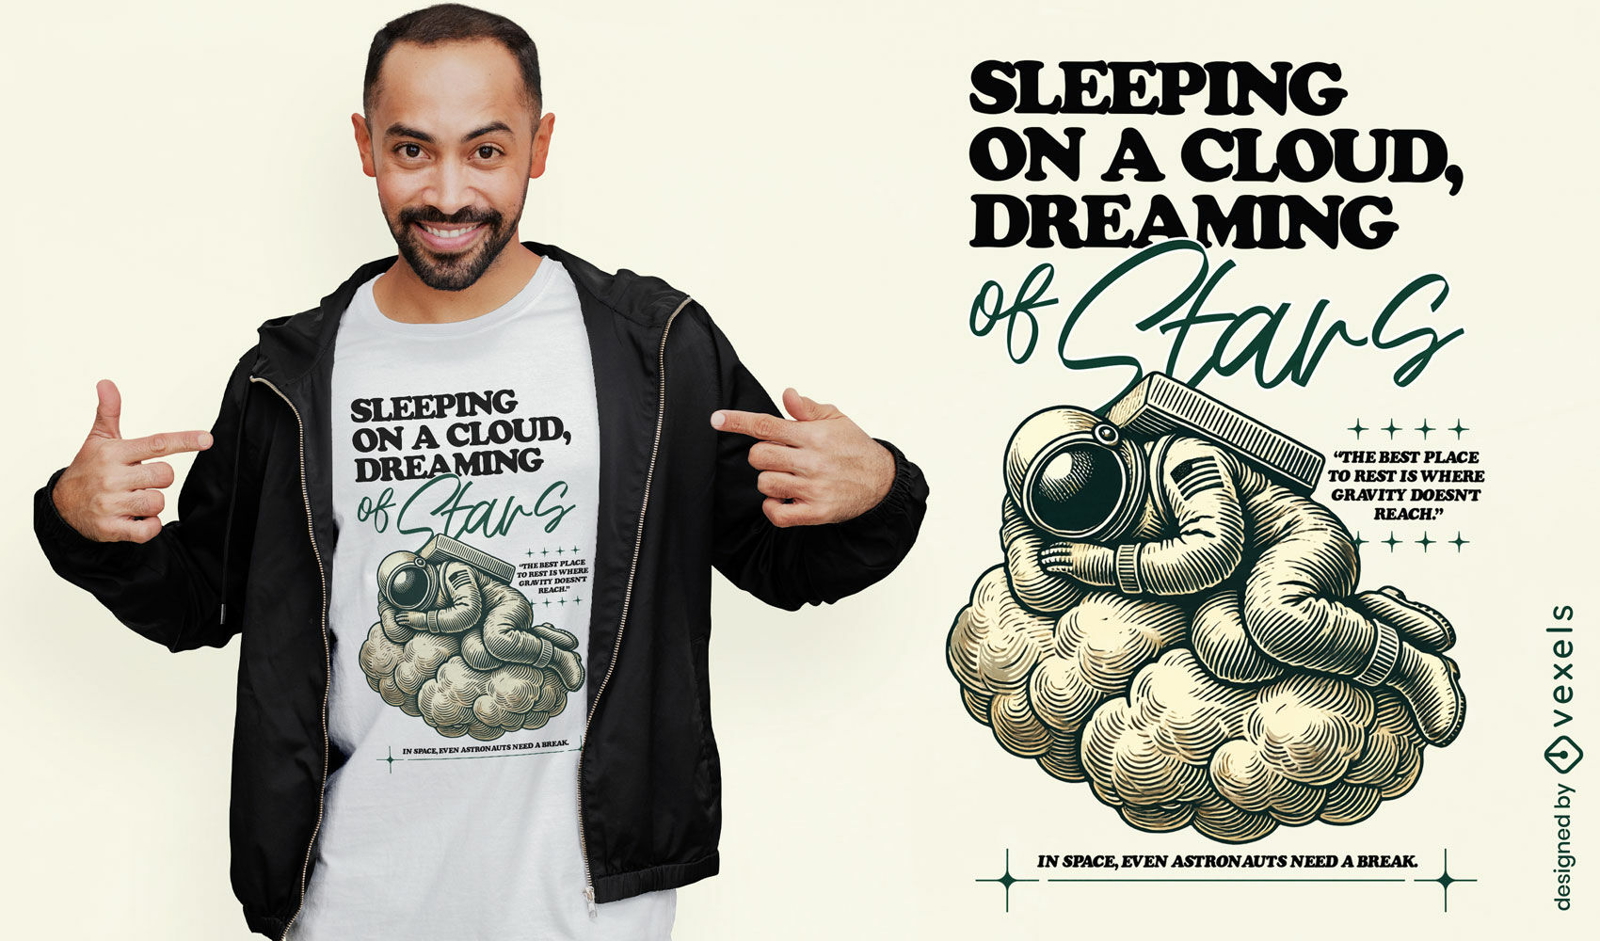 Sleeping on a cloud dreaming of stars t-shirt design